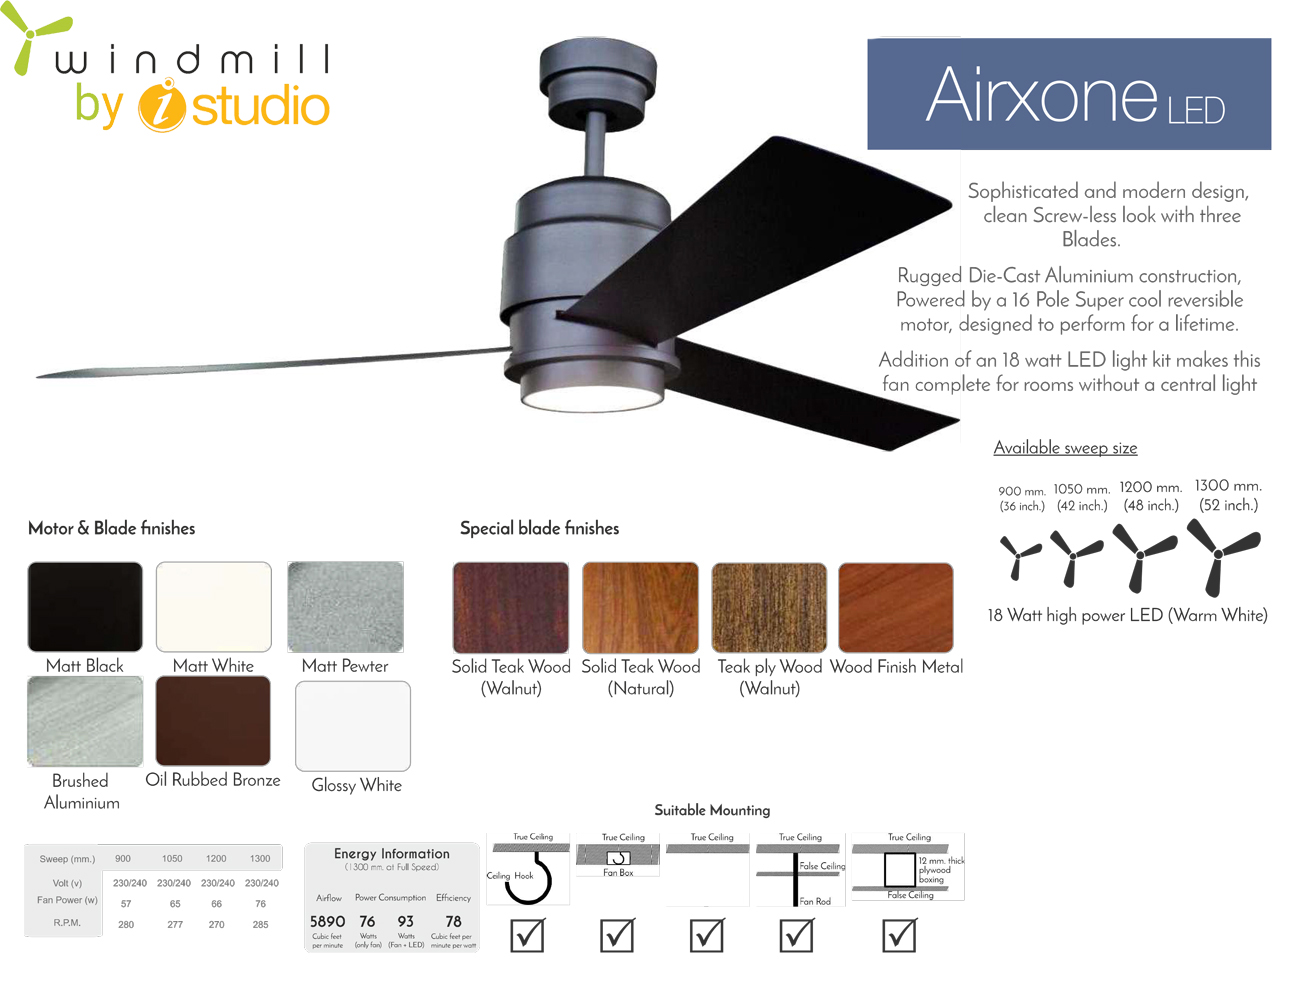 Windmill Airxone LED 48